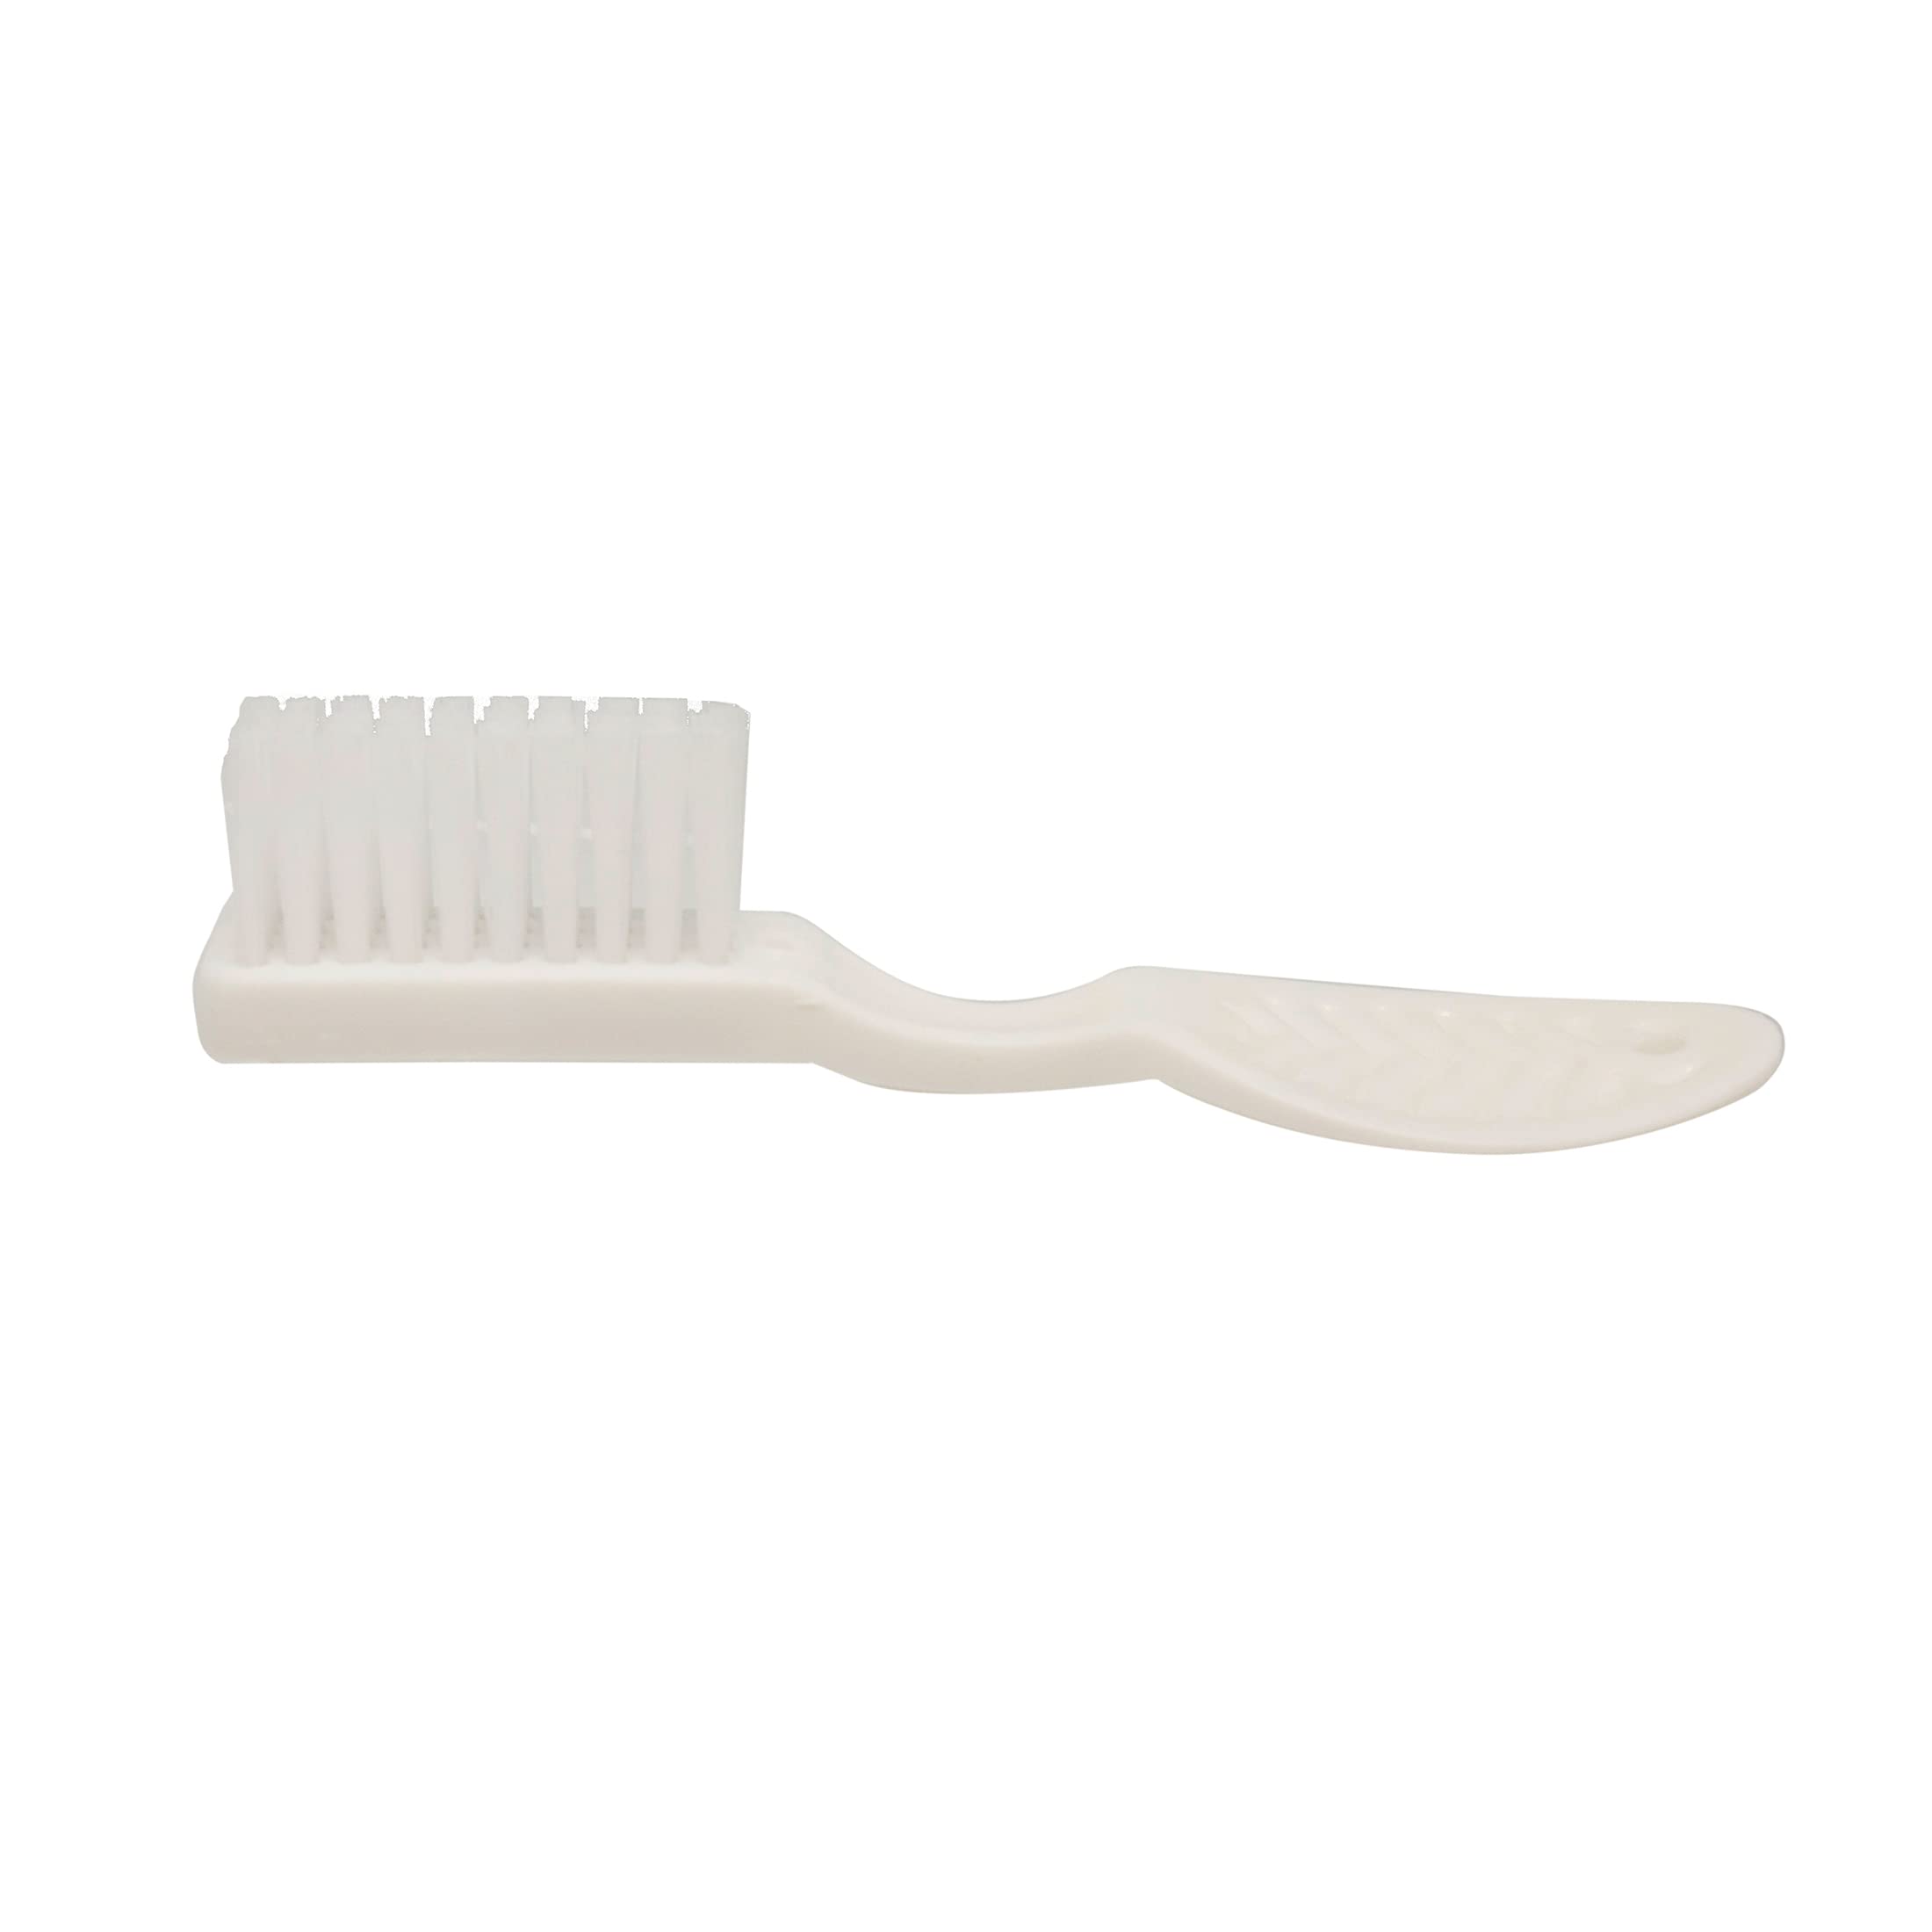 Dukal TB5118 Toothbrush, Security, White Nylon Bristles, White Thumbprint Handle, Pack of 1440